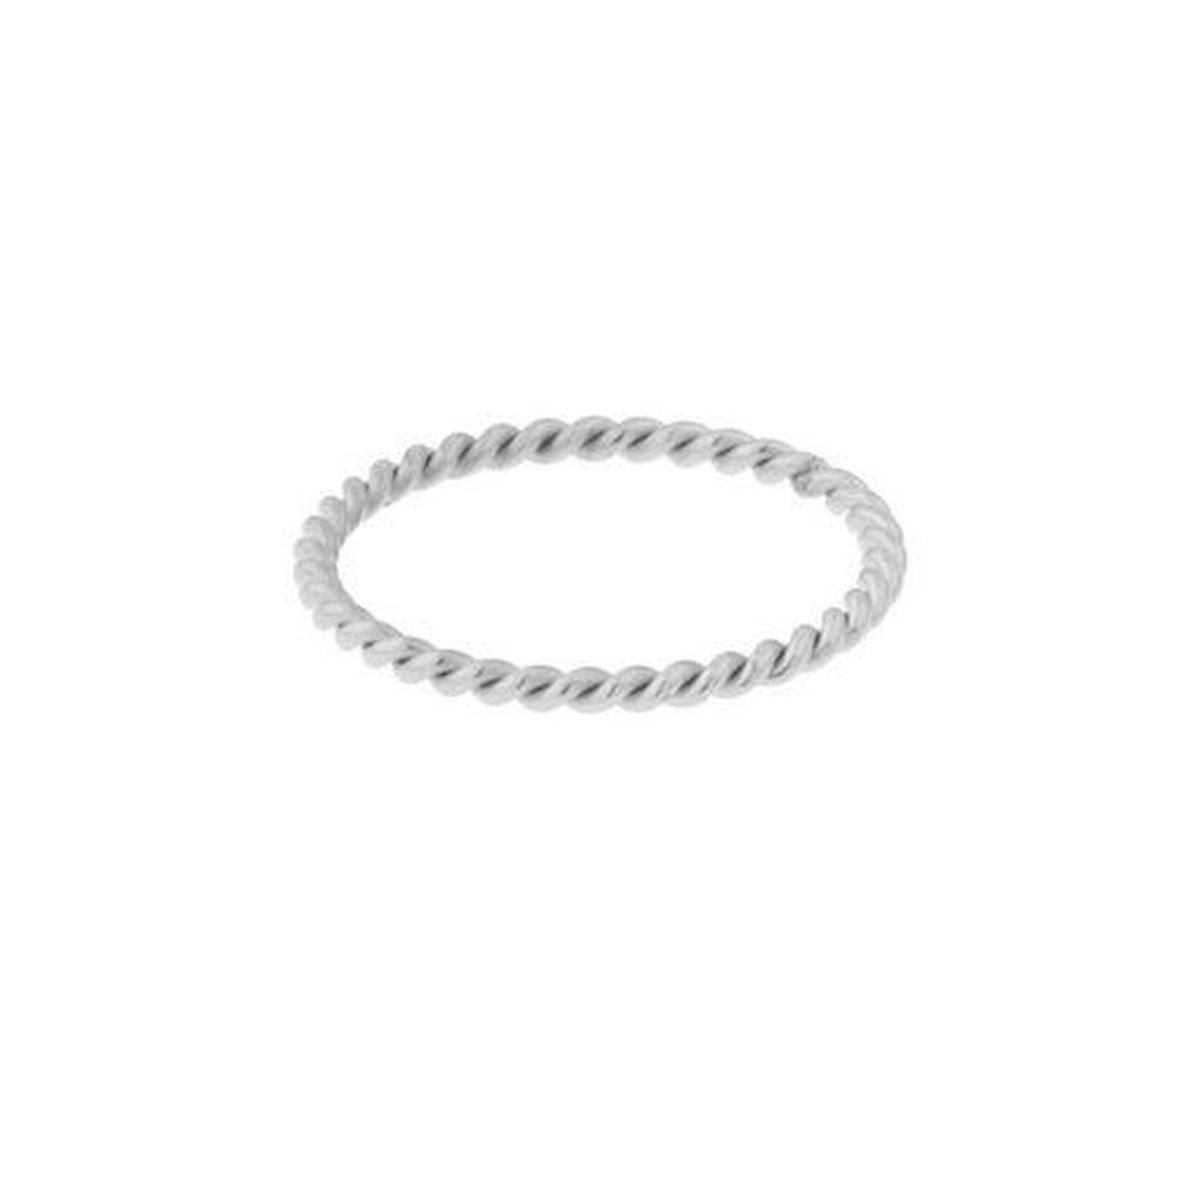 Ring basic gedraaid - Maat 17 - Zilver - Stainless steel (verkleurt niet)